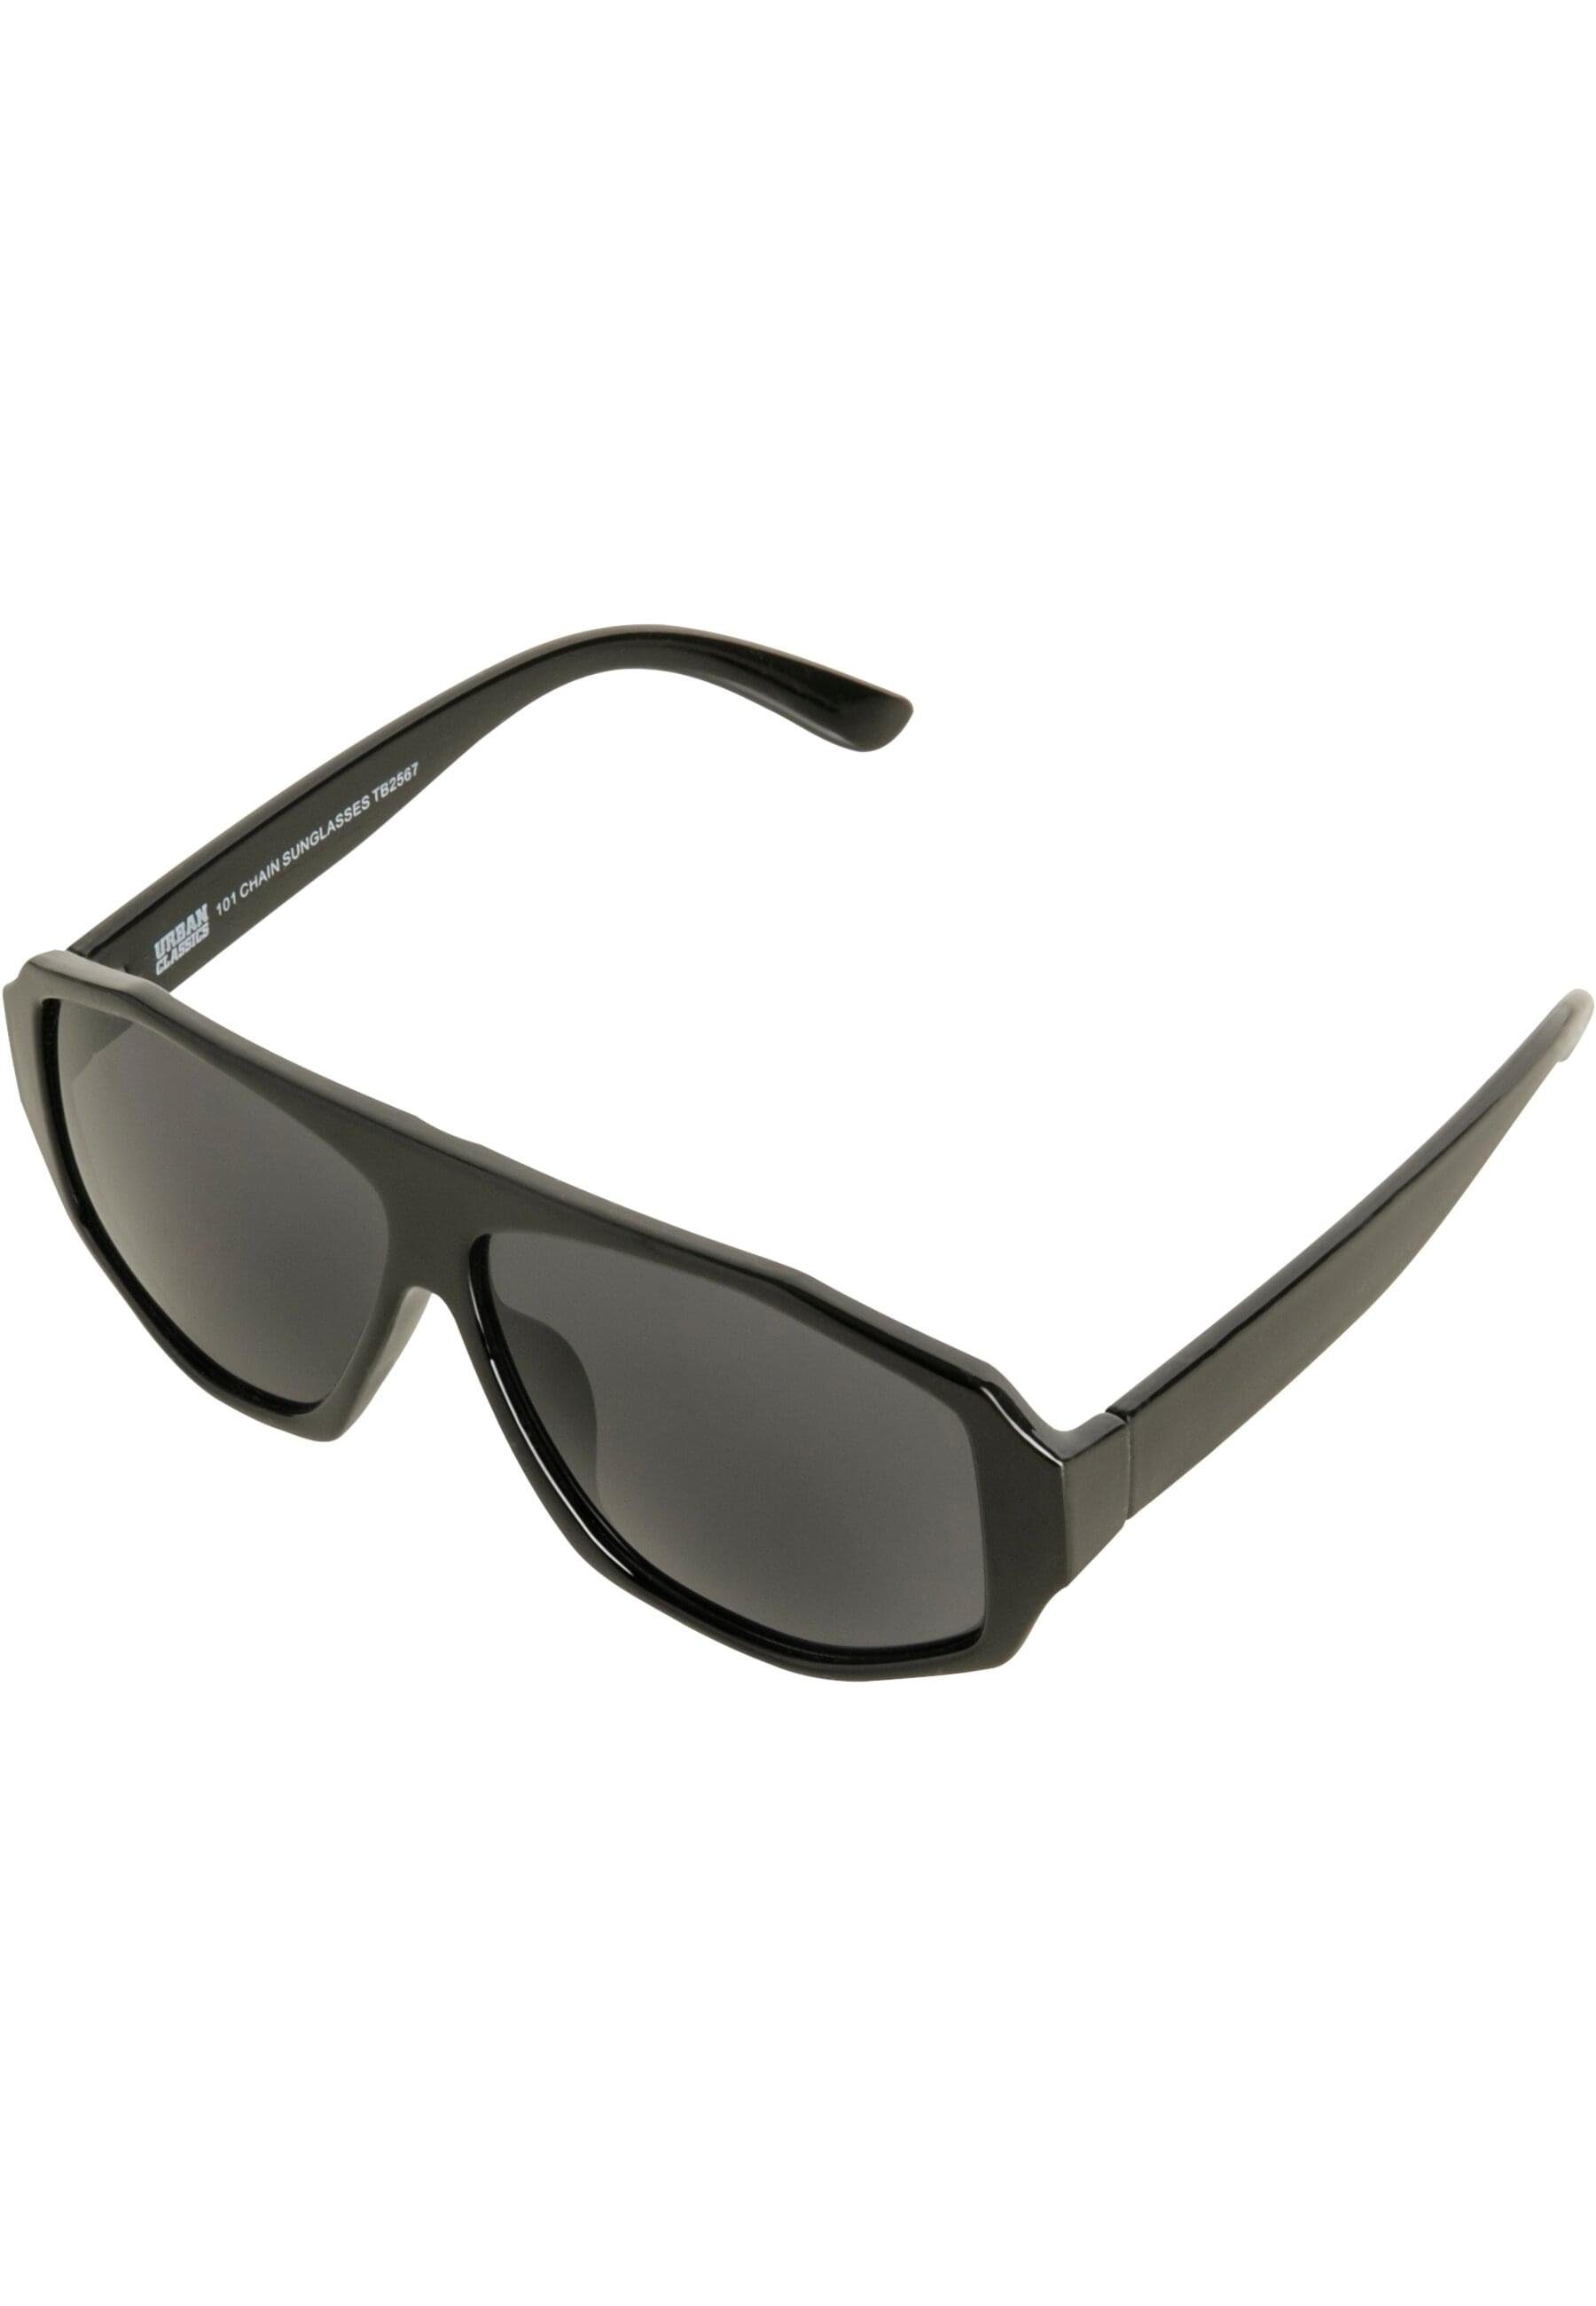 URBAN CLASSICS Sonnenbrille Unisex 101 Chain Chain black/black TB2567 Sunglasses 101